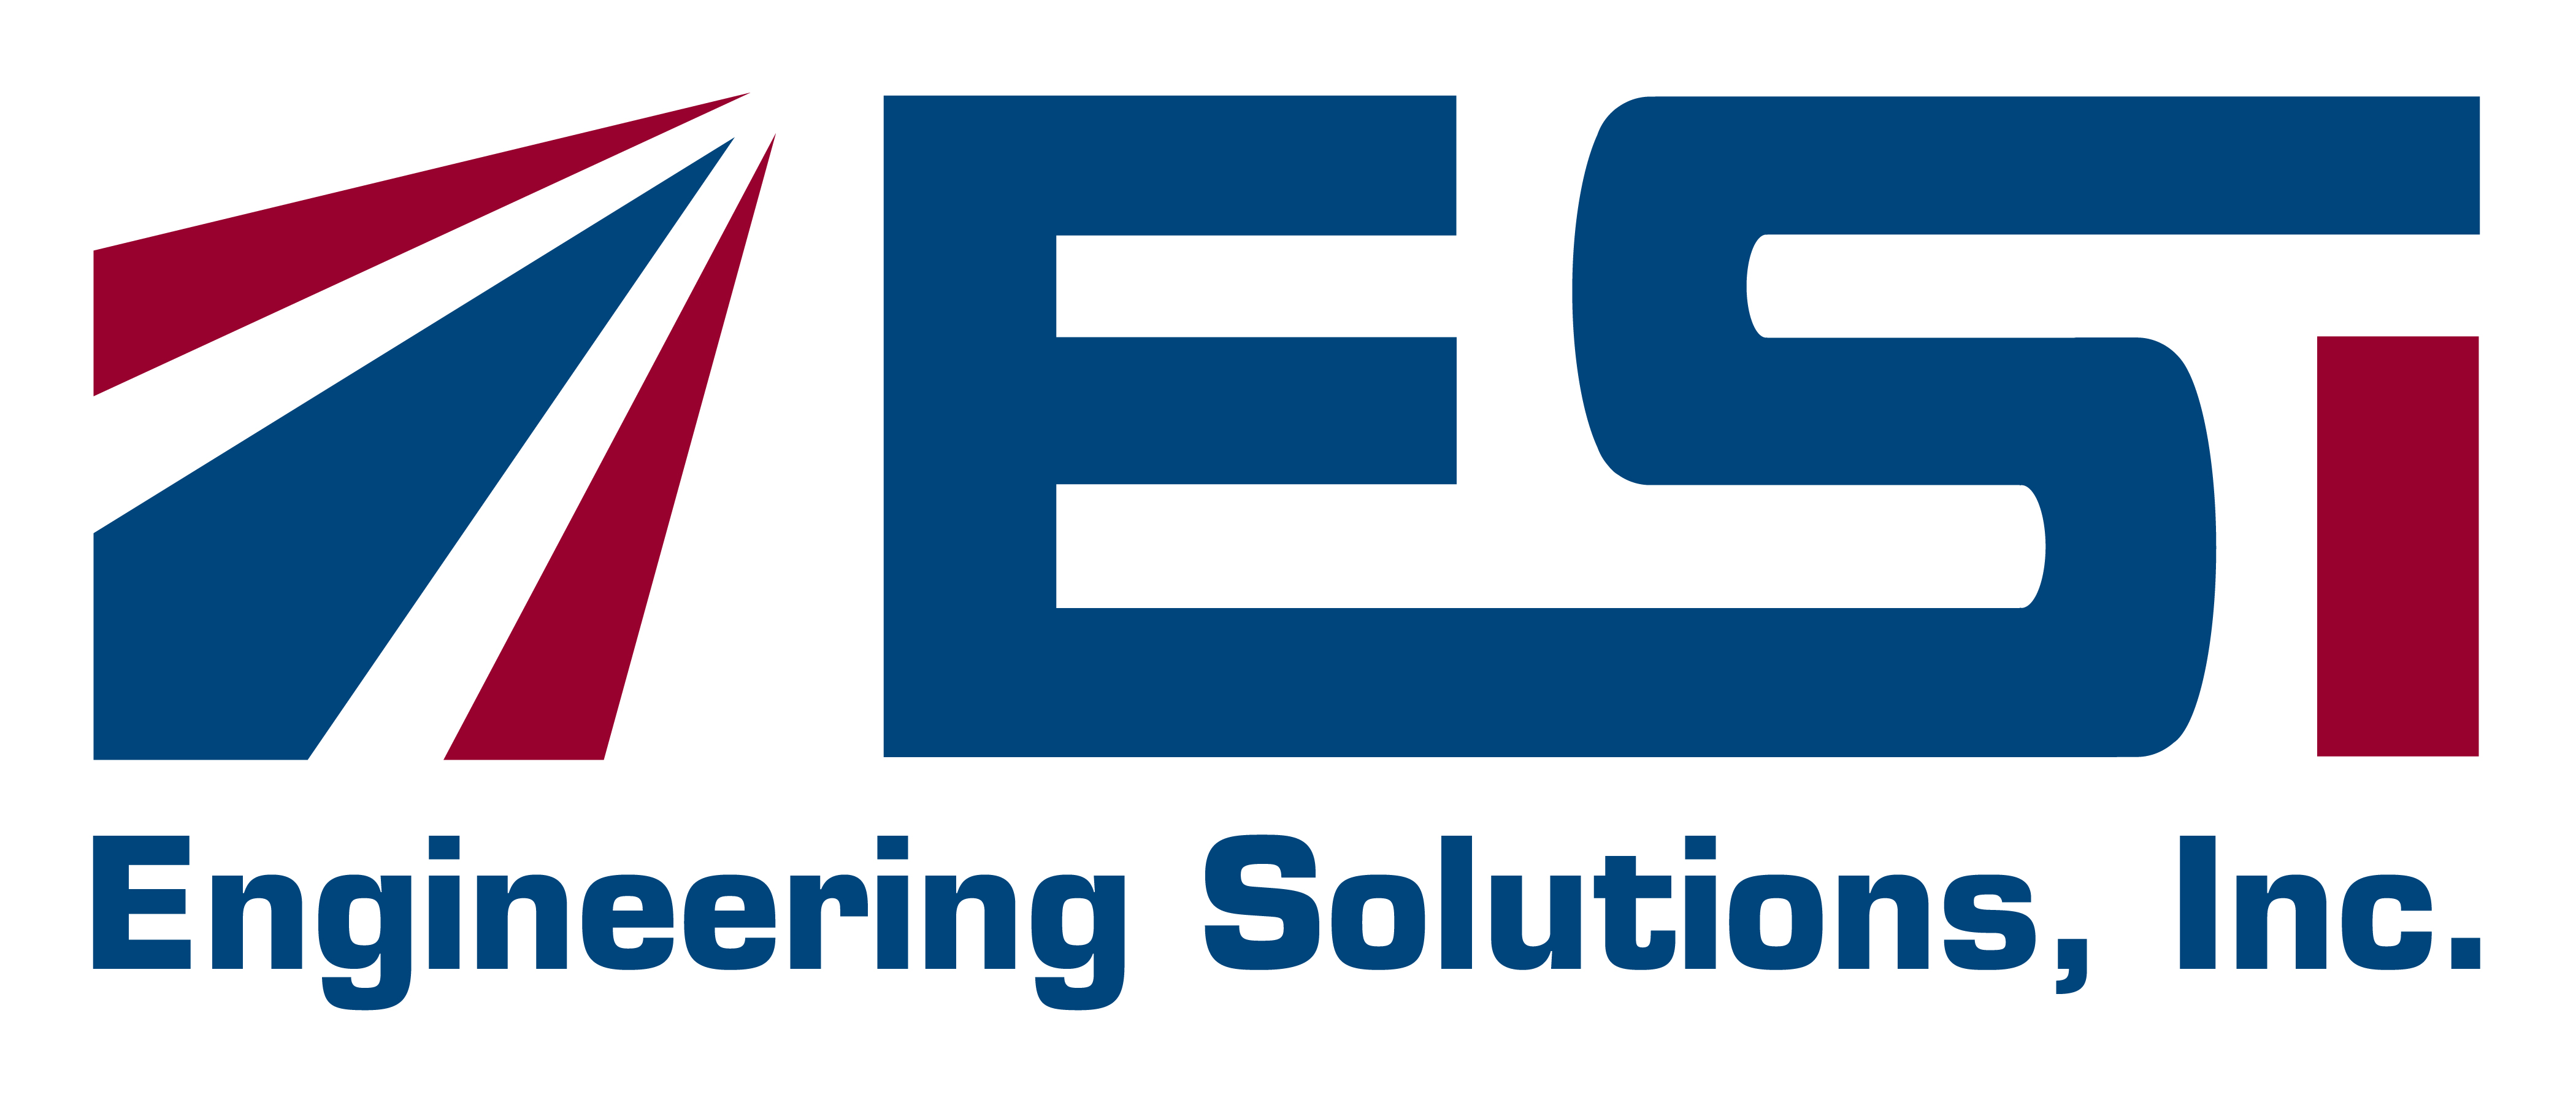 Engineering Solutions, Inc. logo